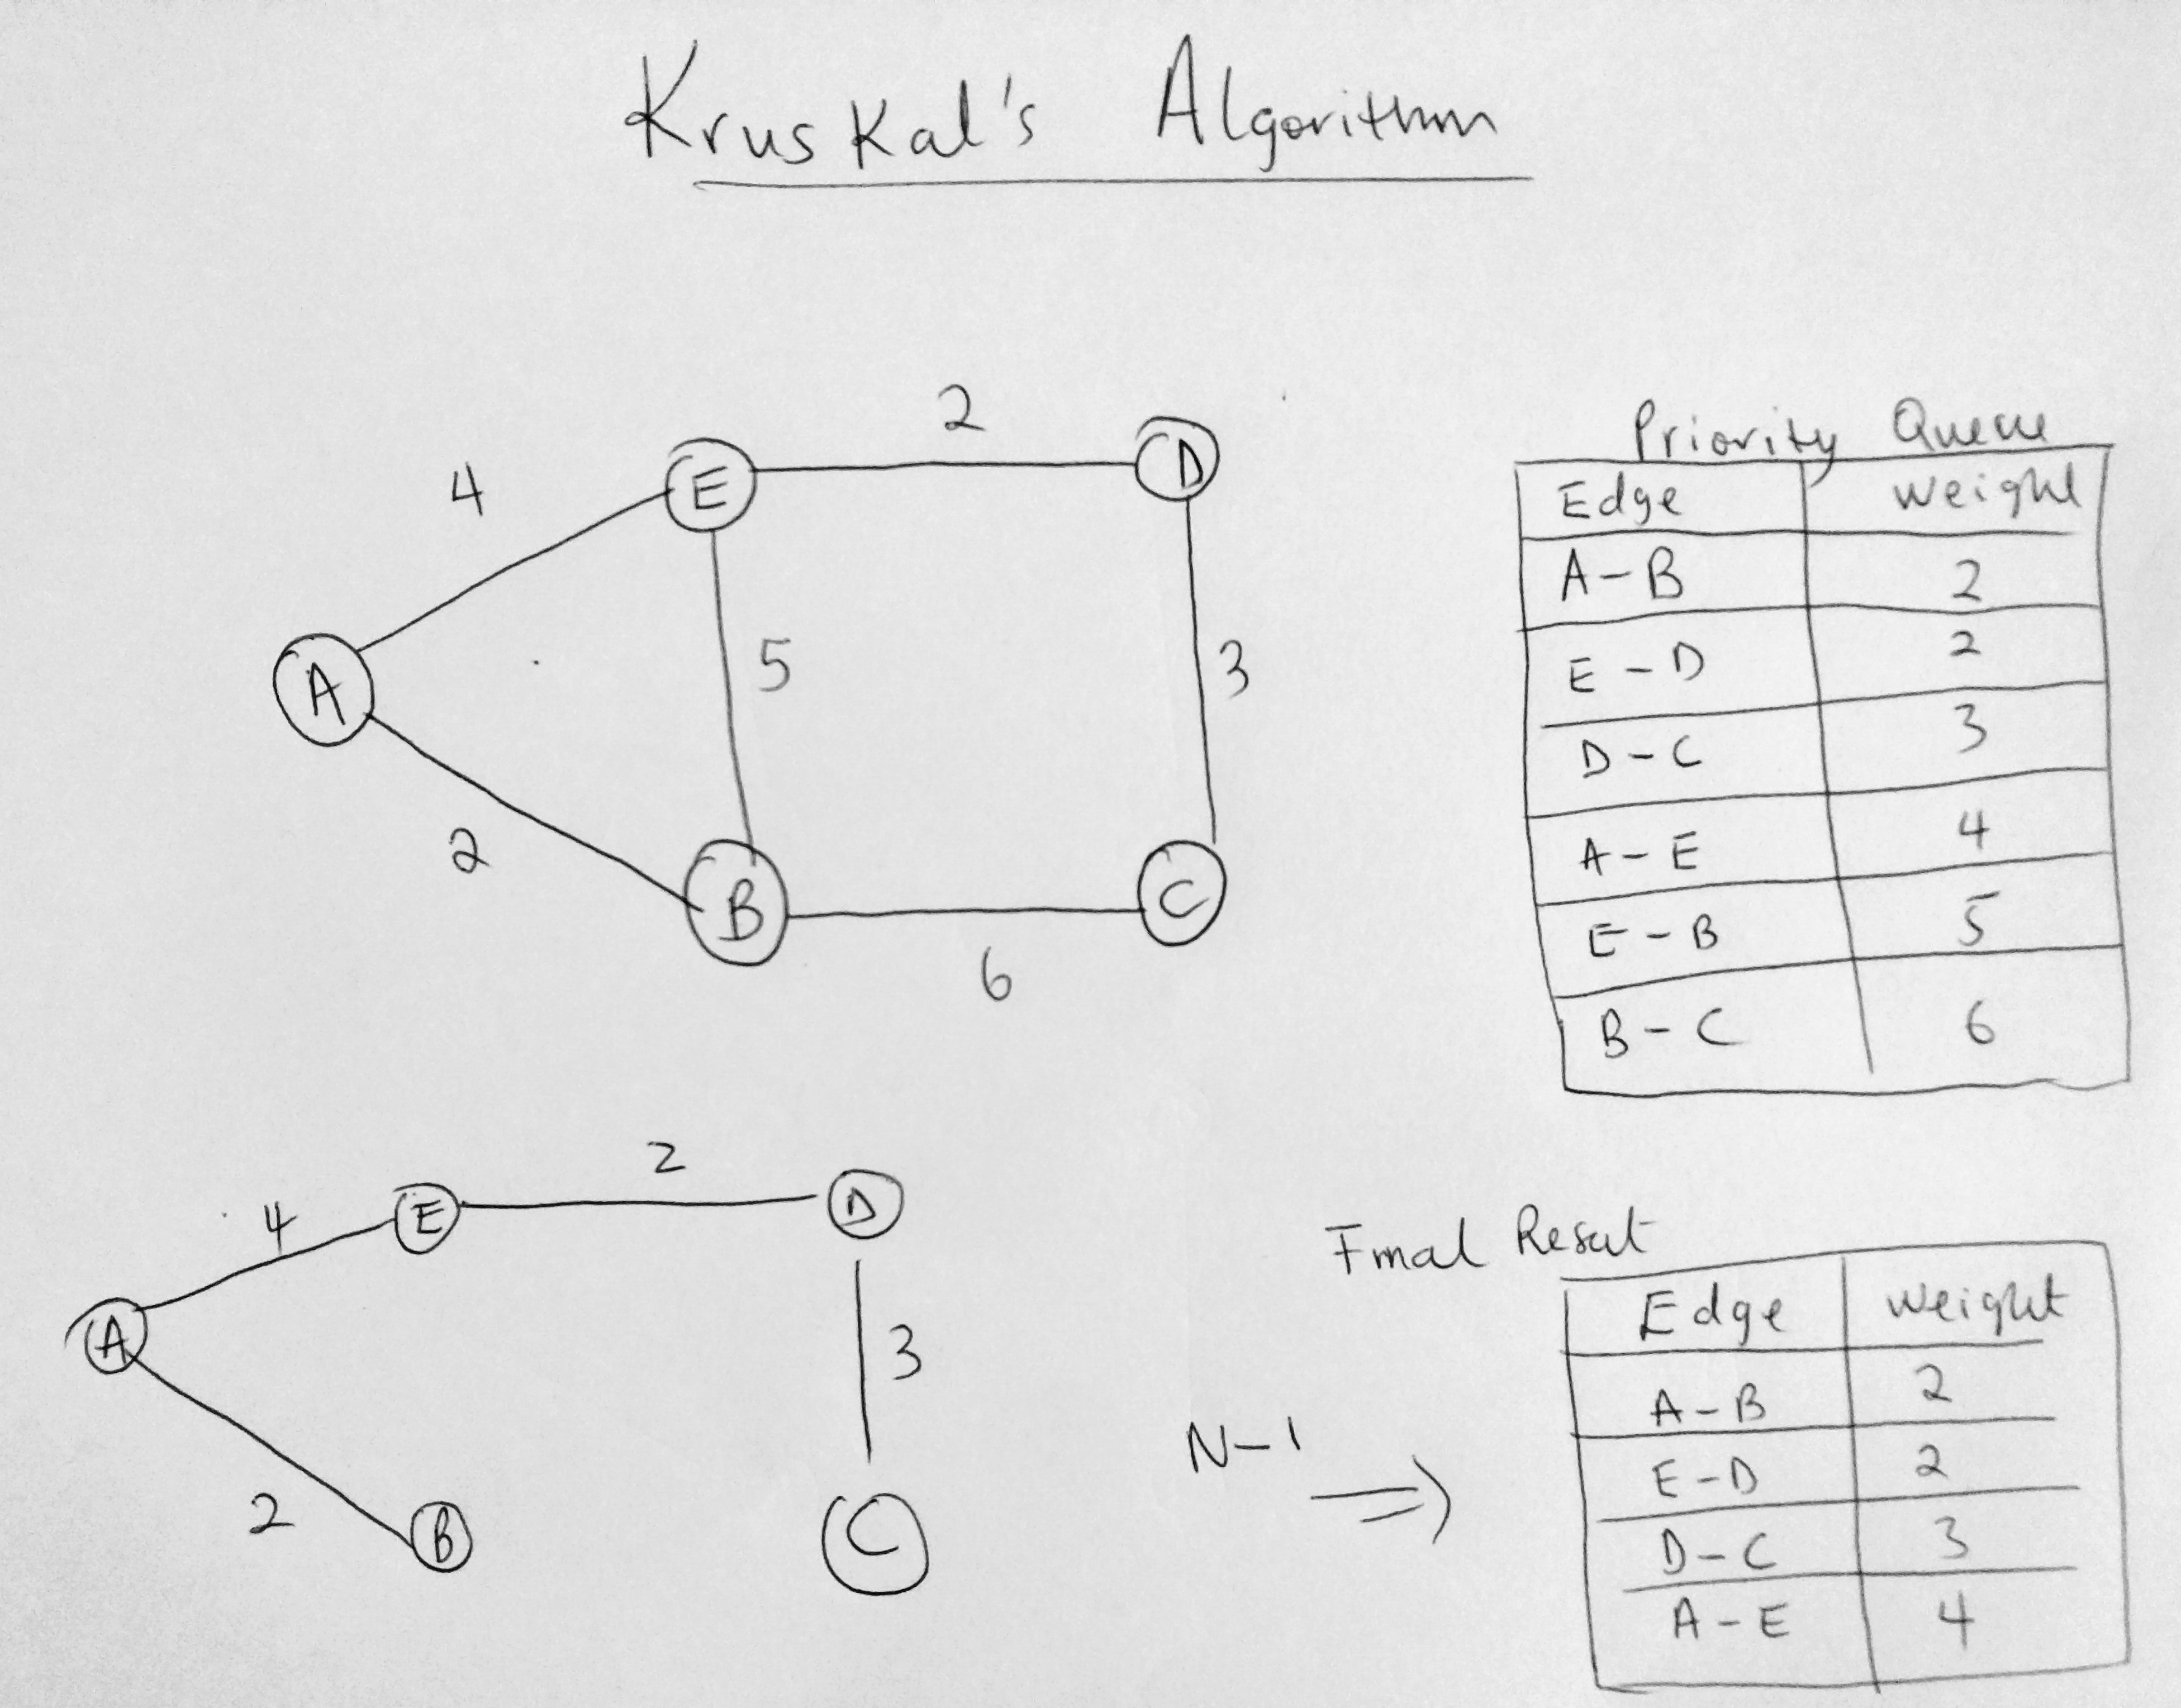 kruskals algorithm javascript